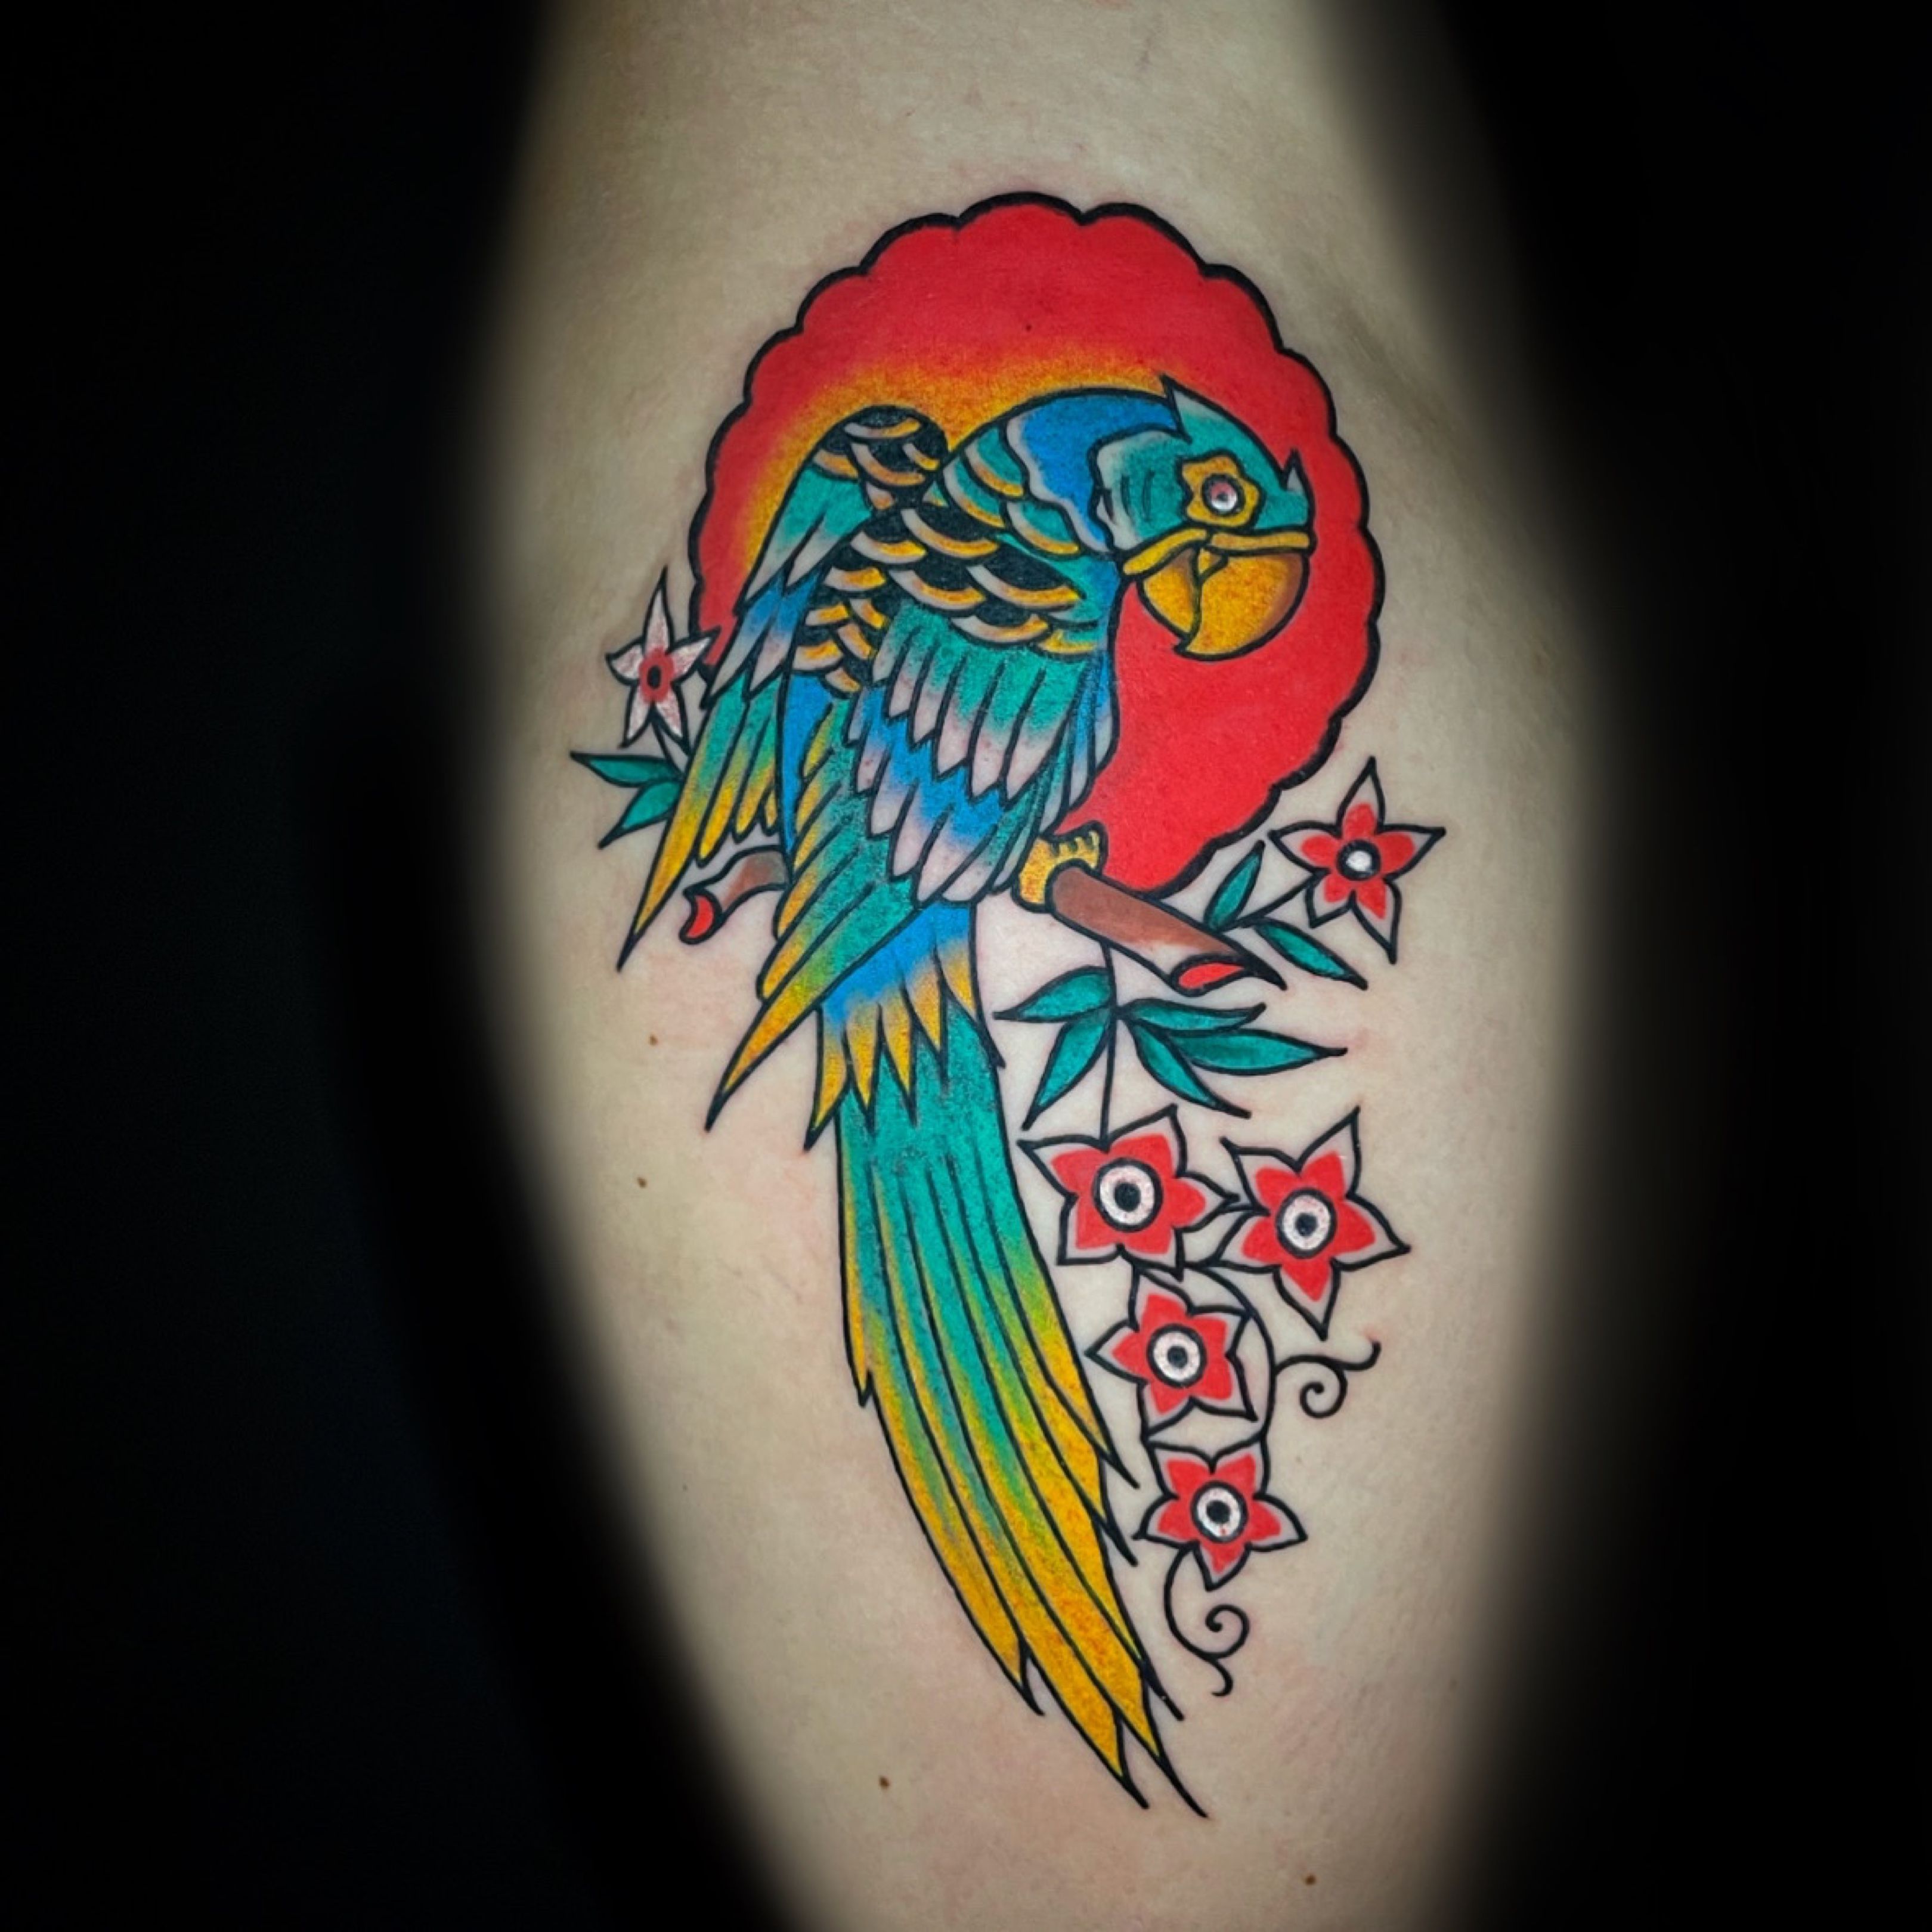 Tattoo uploaded by Maiko Only • Parrot #tattoo #tattoos #tatts #uk  #nottingham #colourfultattoos #watercolourtattoo #birdtattoo  #botanicaltattoo #flowers #colour #uktattoos #nottinghamtattoos #inked #ink  #colours #floral #badgiebird #badgiebirdtattoo ...